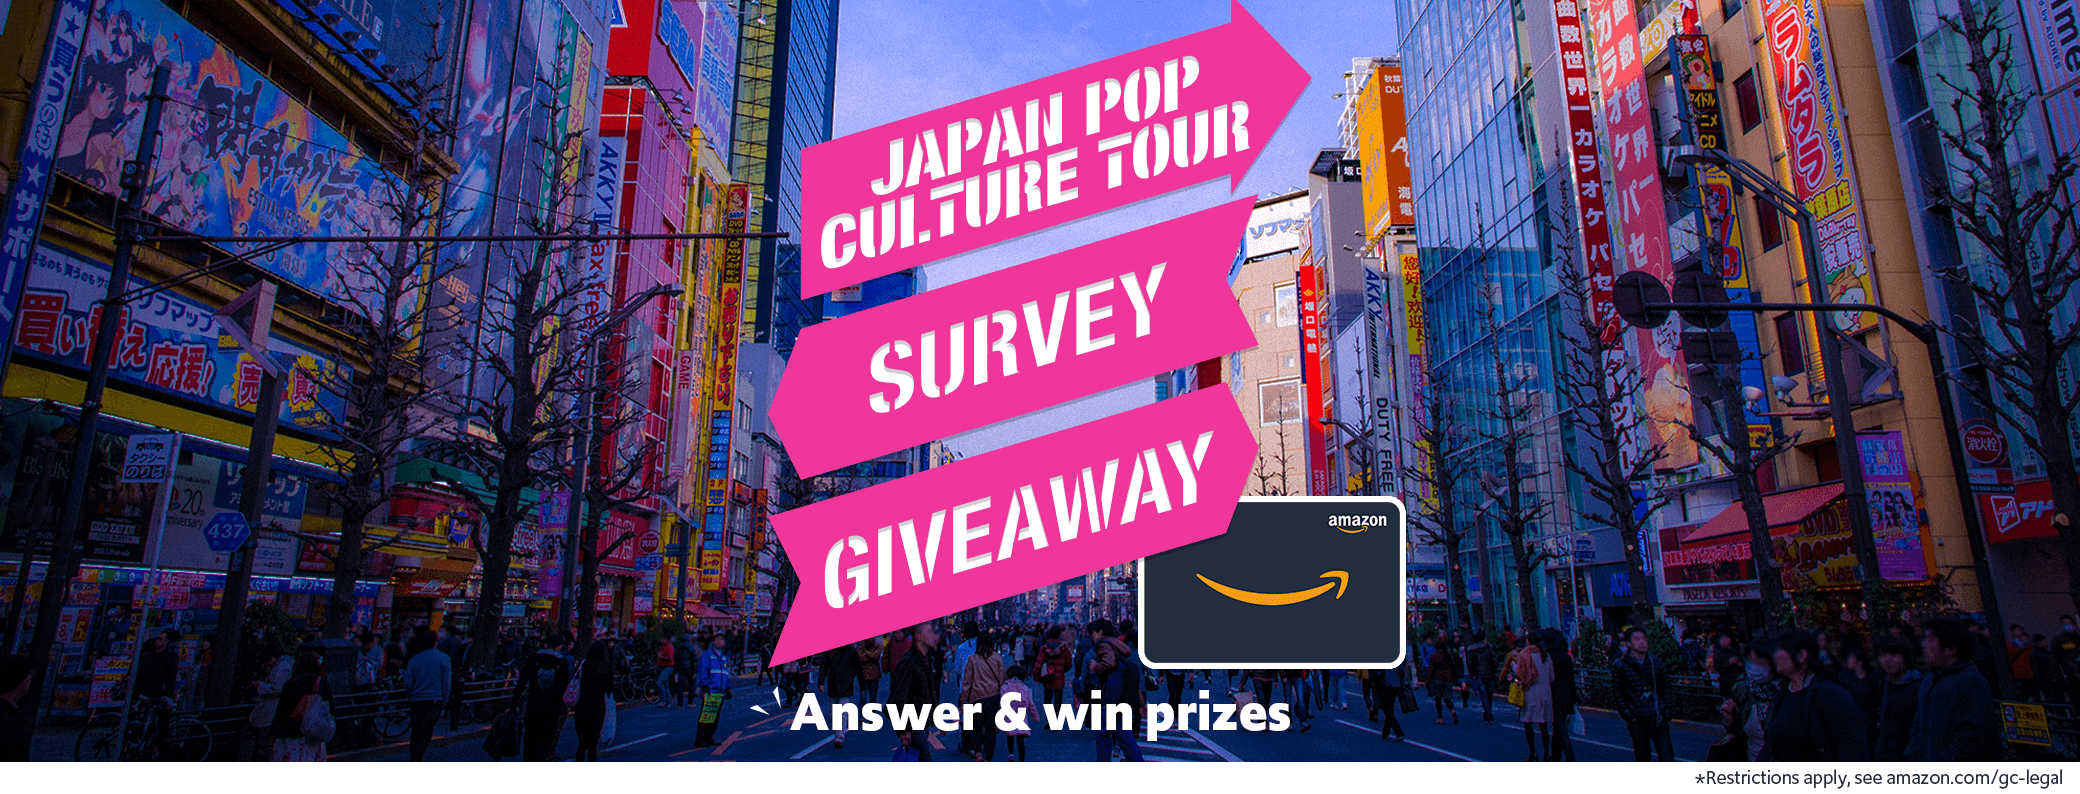 What's your dream Japan pop culture tour? Answer the survey & win prizes!